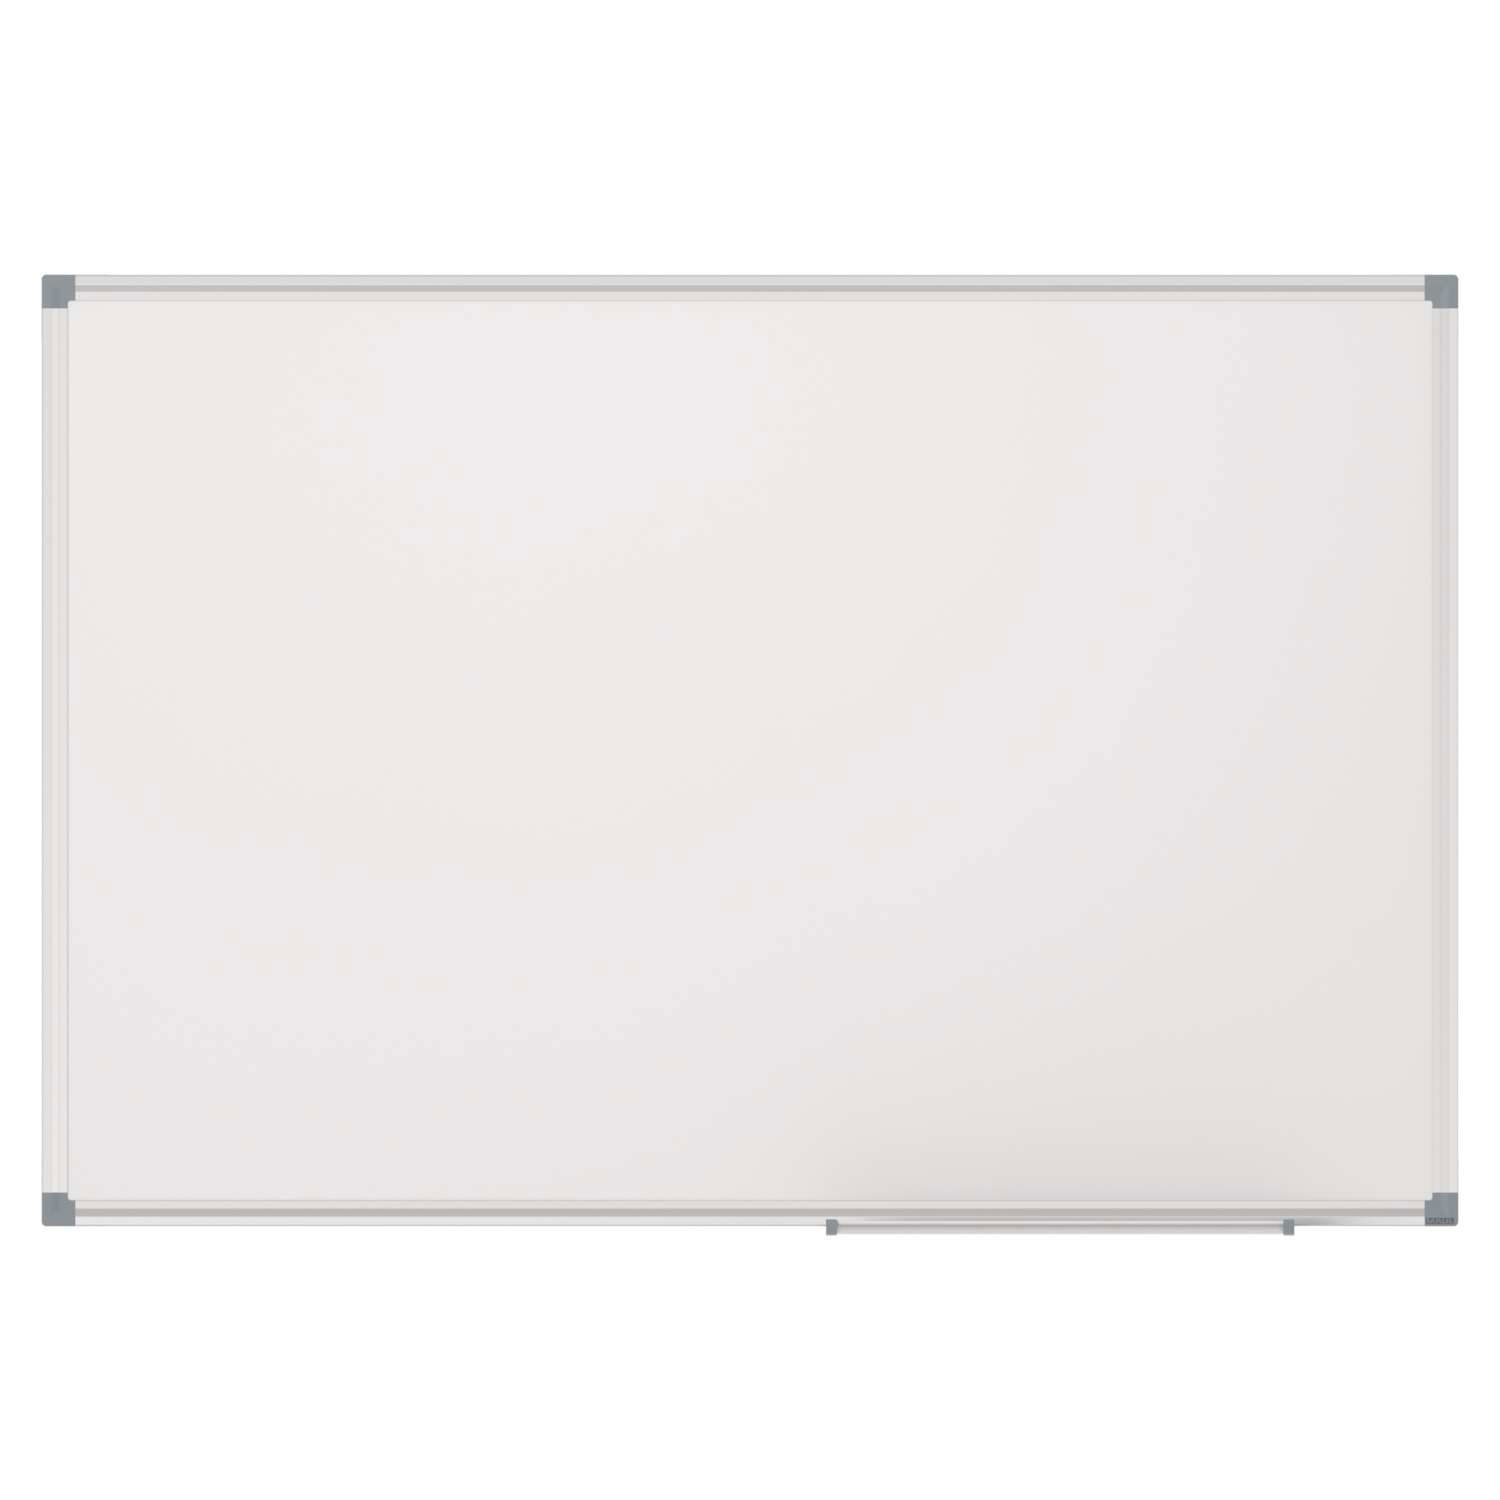 Whiteboard MAULstandard, 90x180 cm